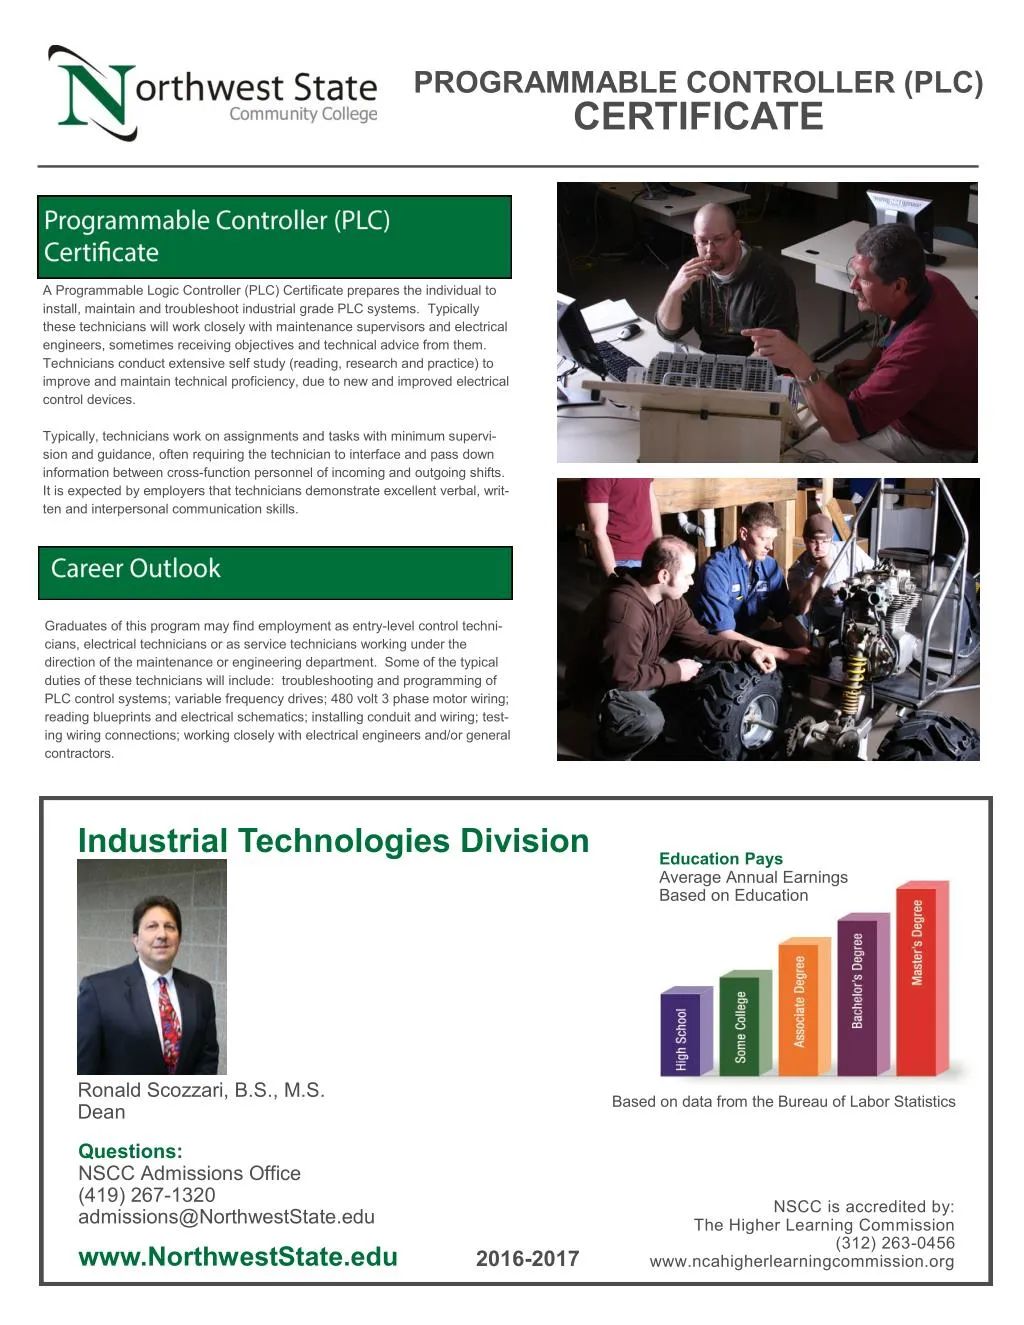 PPT 2016 IndTech PLC CERTIFICATE RevJuly14 PowerPoint Presentation